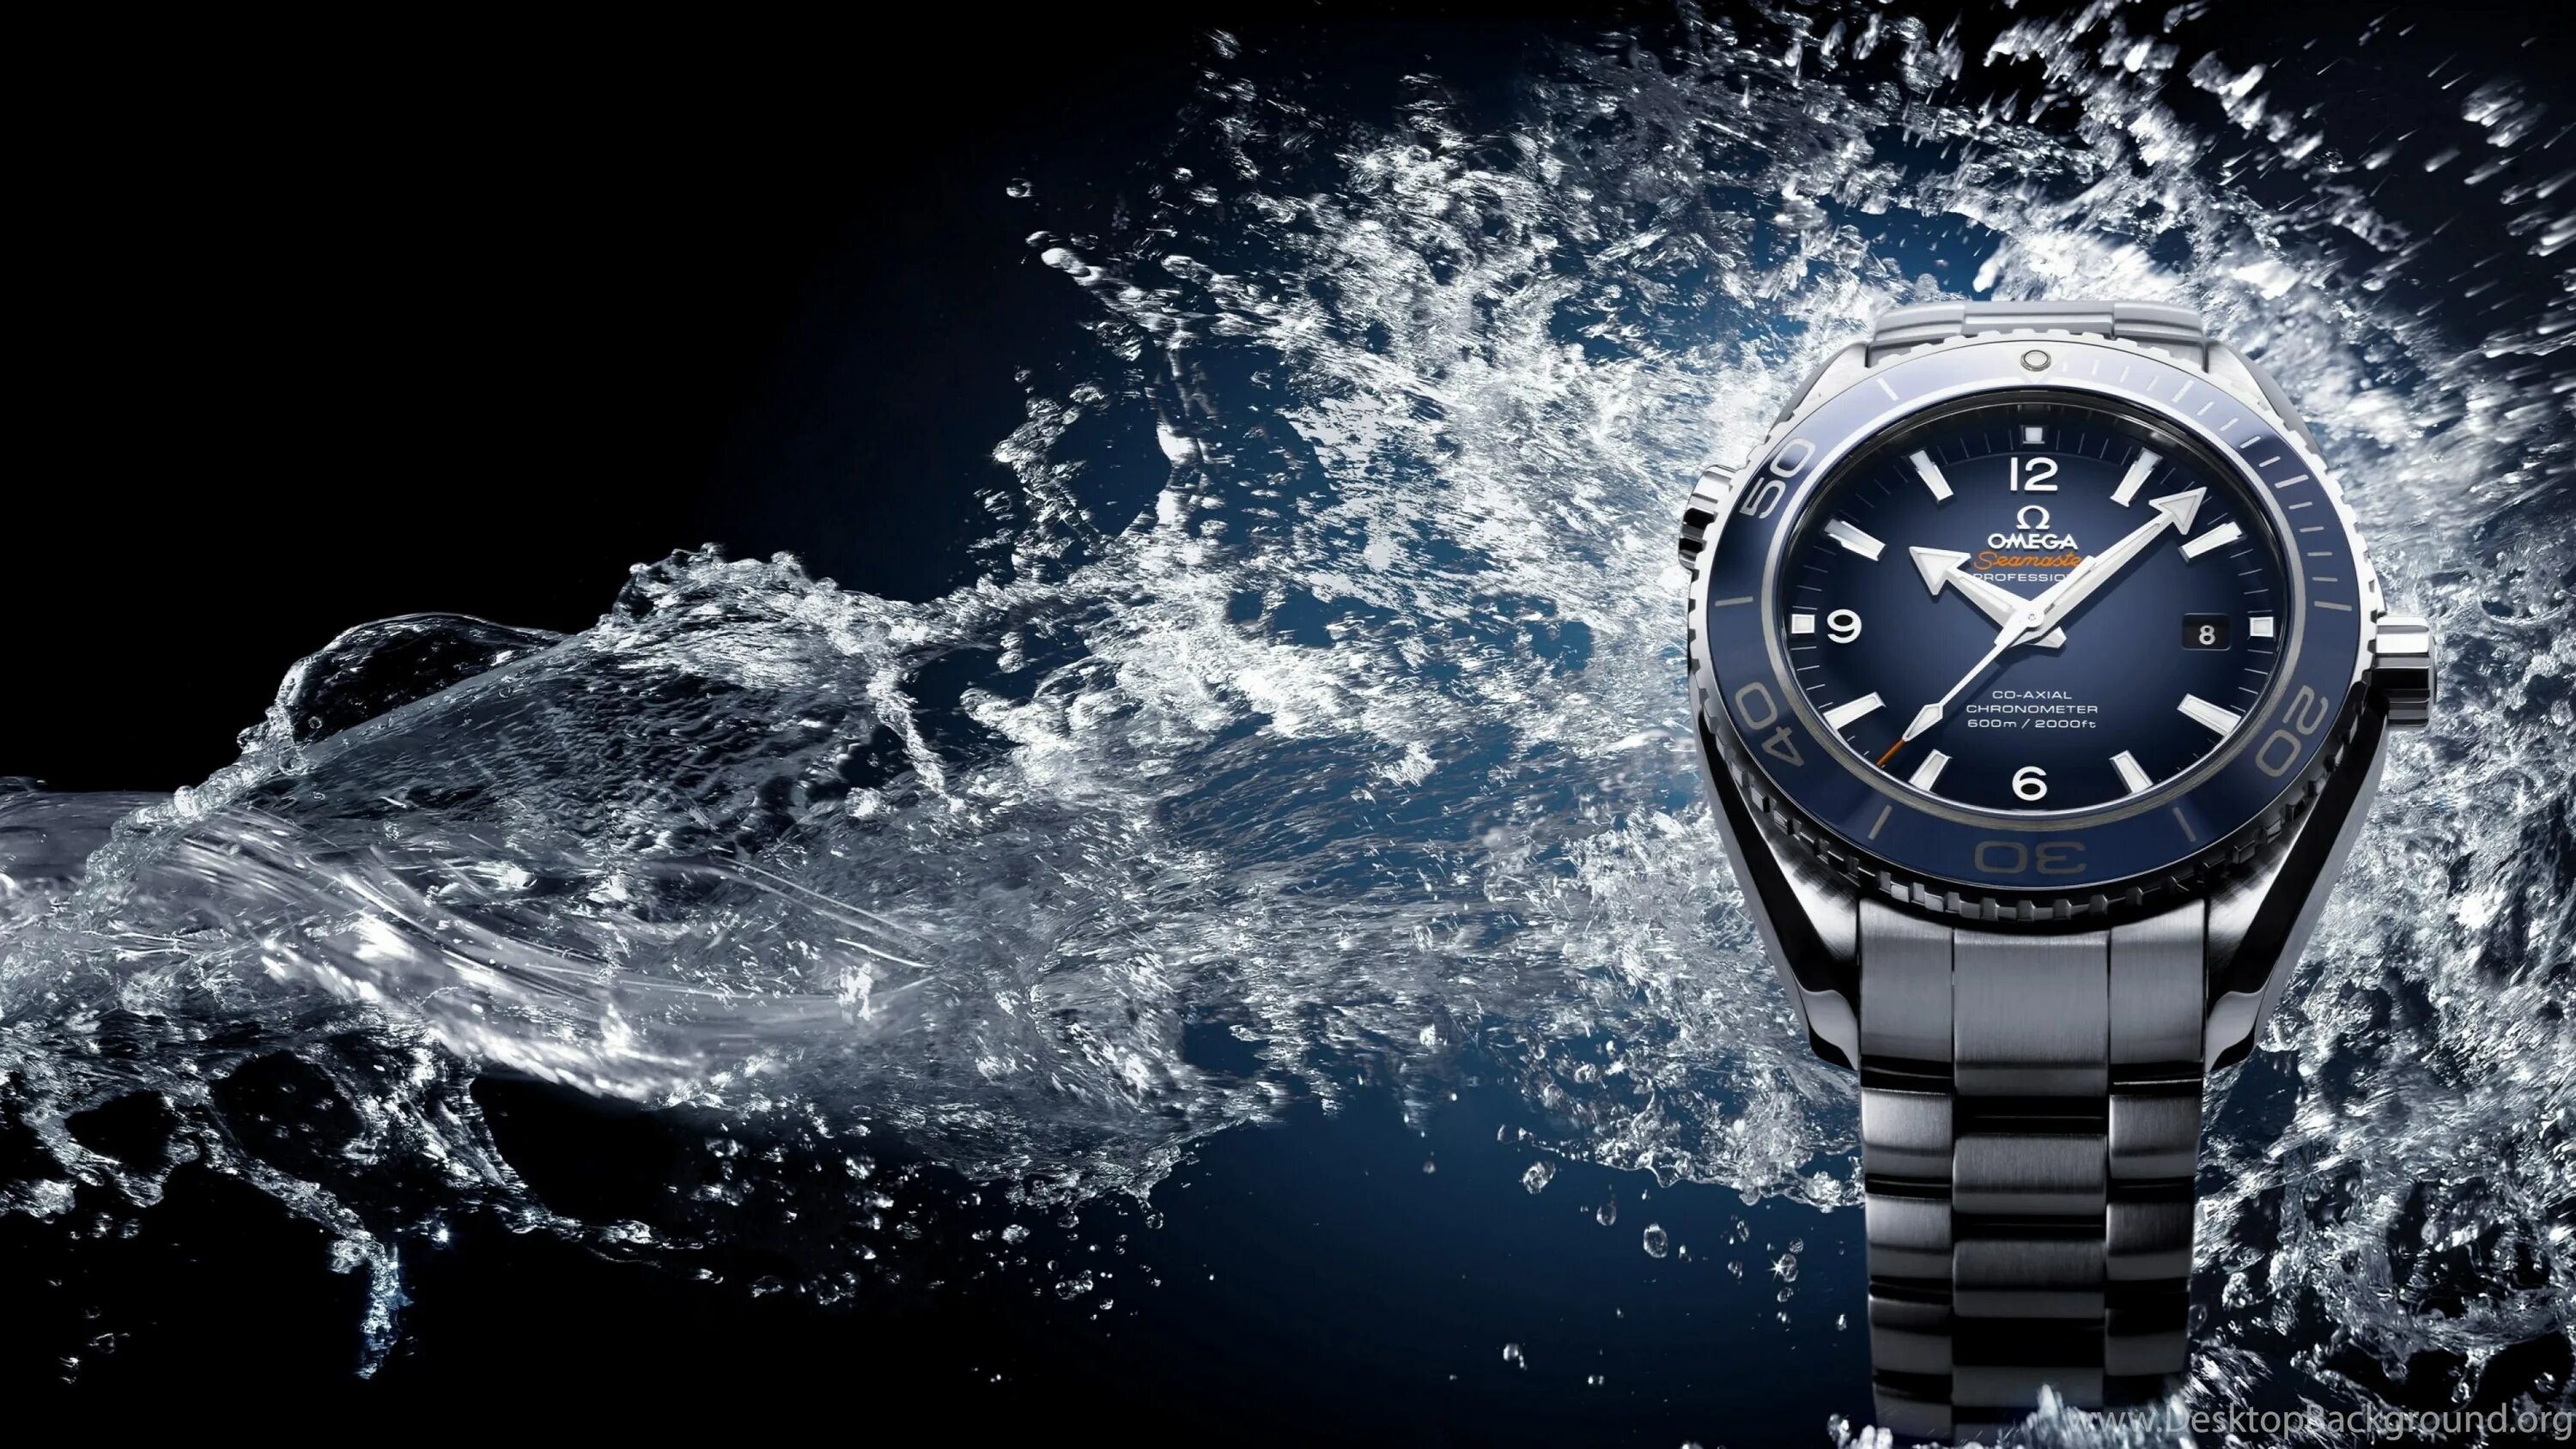 The world watch com. Omega Seamaster. Обои часы Омега симастер. Часы в воде. Швейцарские часы.